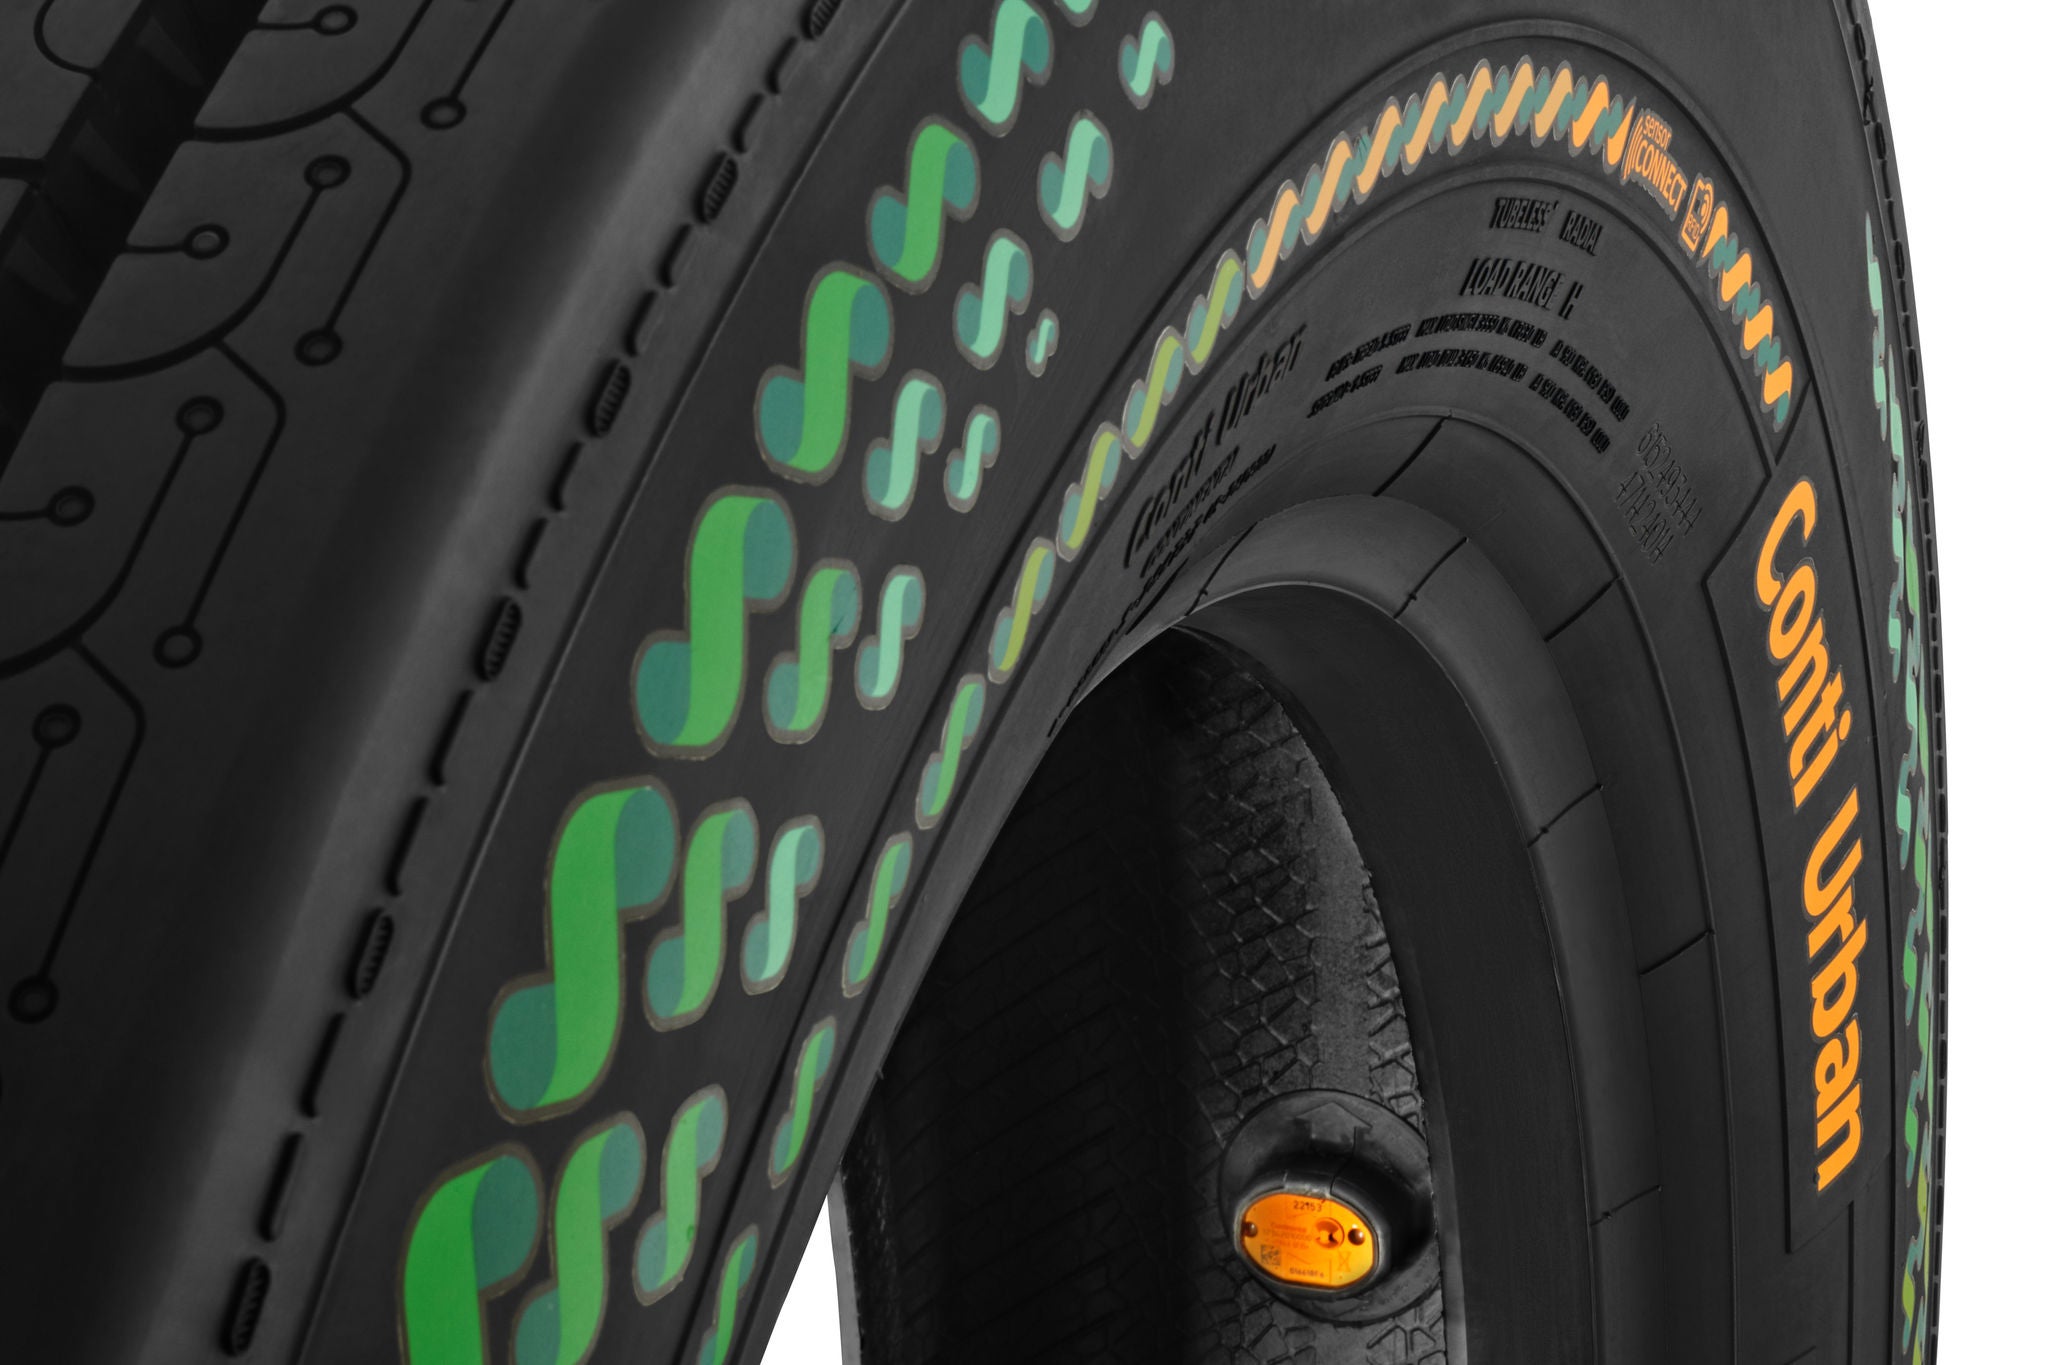 Detail view of a ContiUrban tire